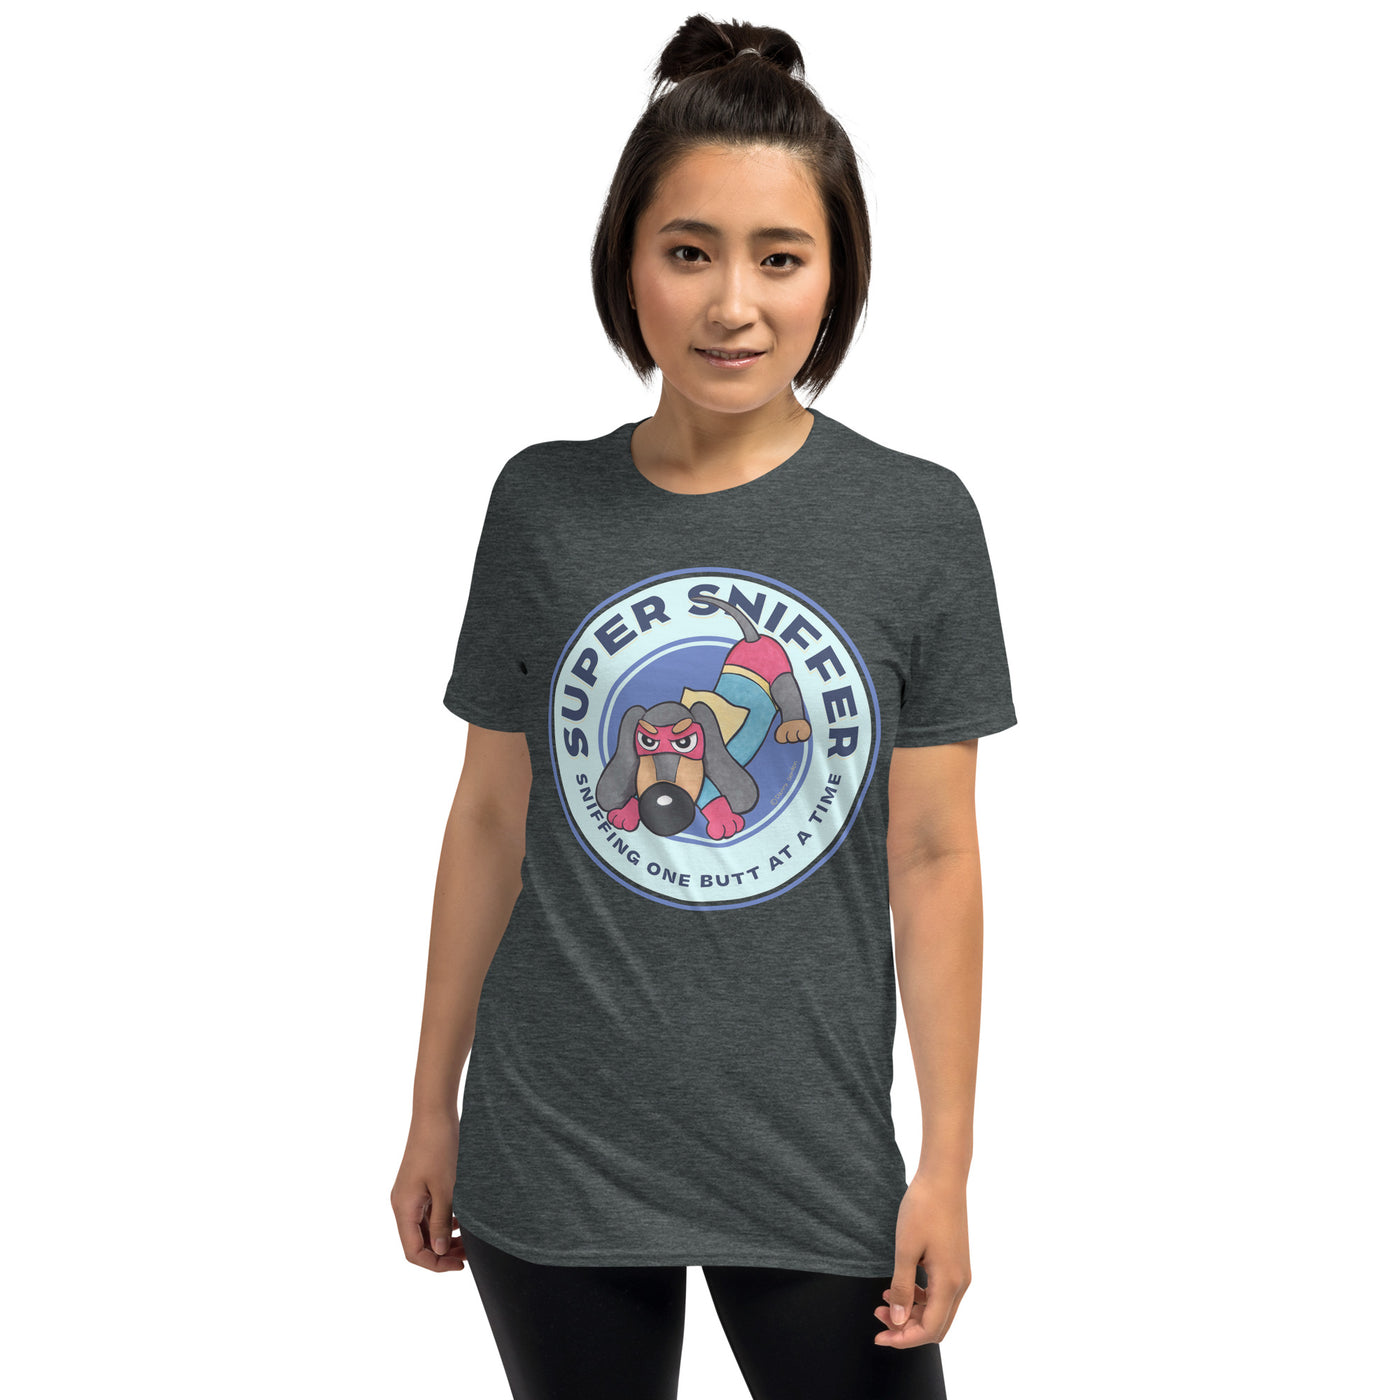 Cute Super Sniffer Doxie Dog on funny Dachshund Superhero Unisex T-Shirt